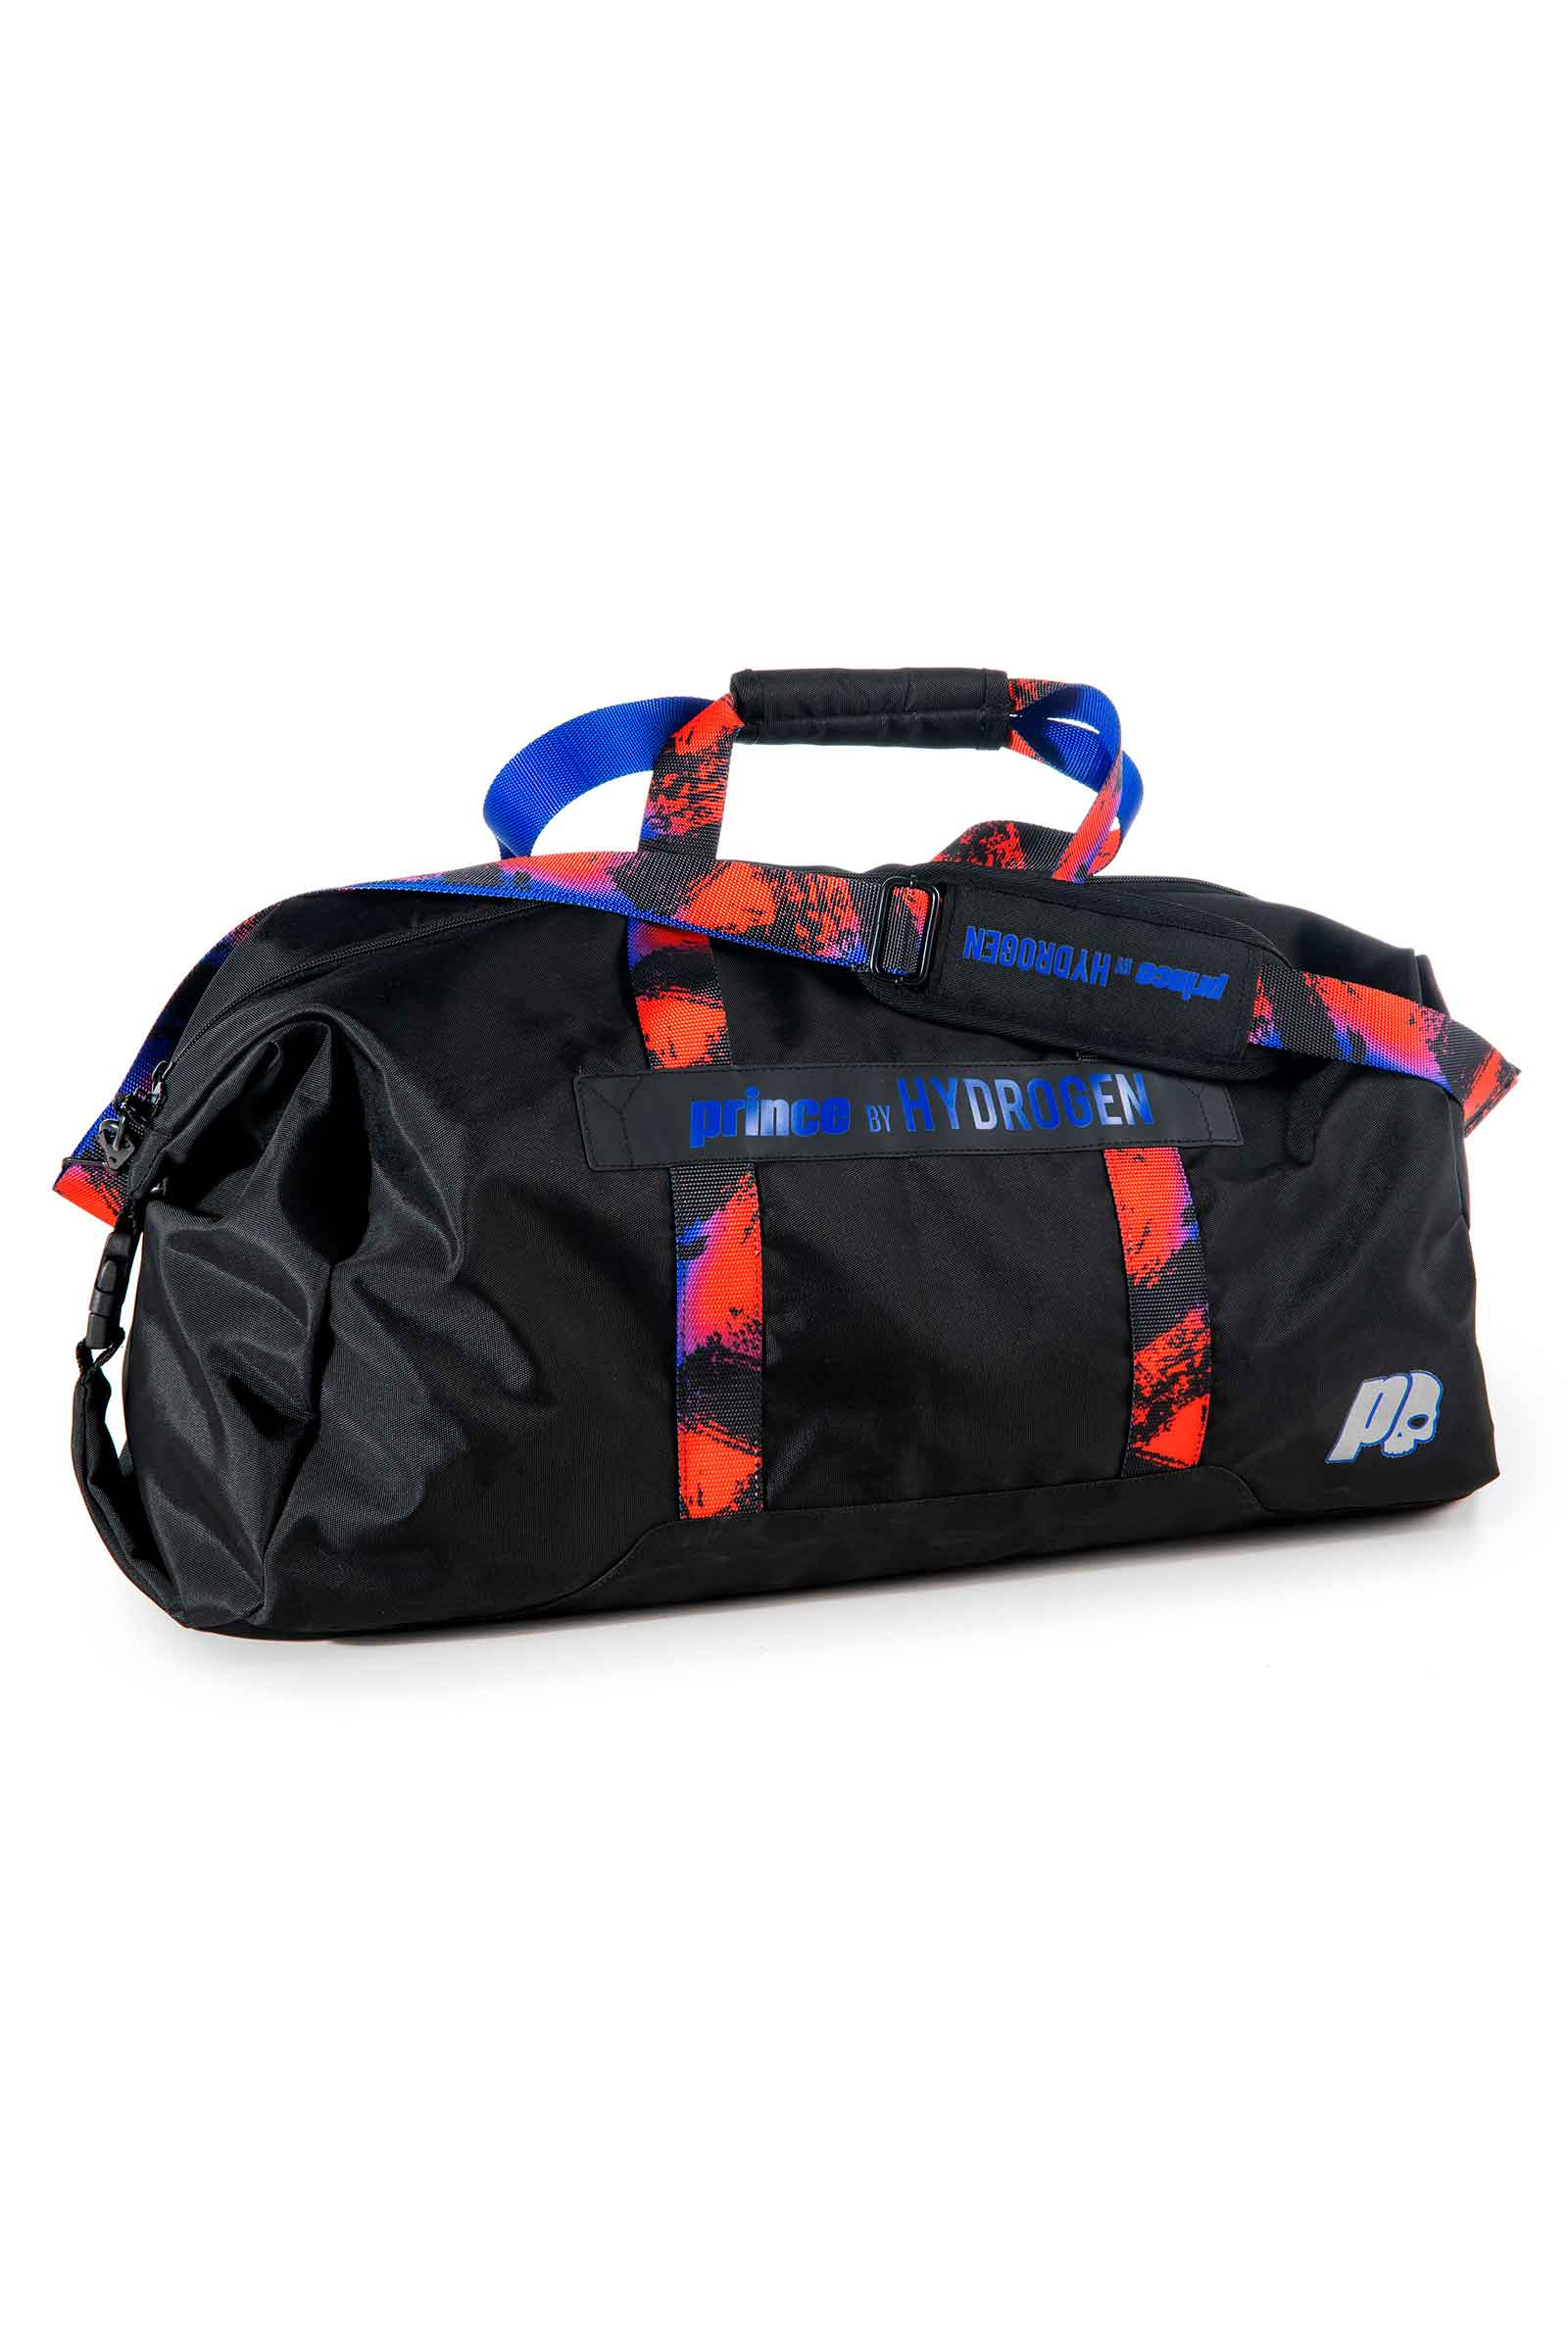 RANDOM BAG PRINCE BY HYDROGEN - Accessories - Hydrogen - Luxury Sportwear